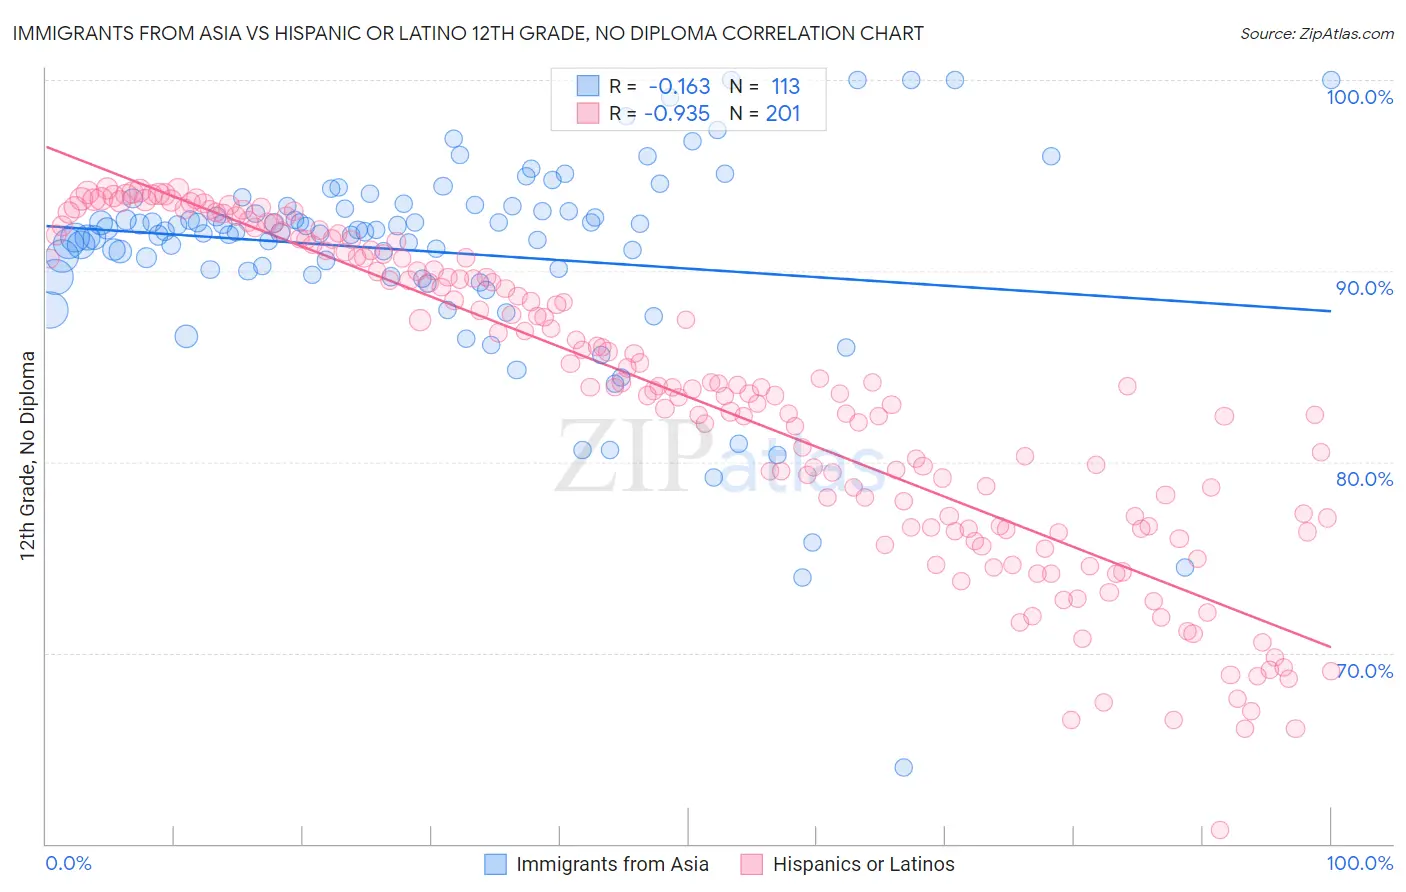 Immigrants from Asia vs Hispanic or Latino 12th Grade, No Diploma